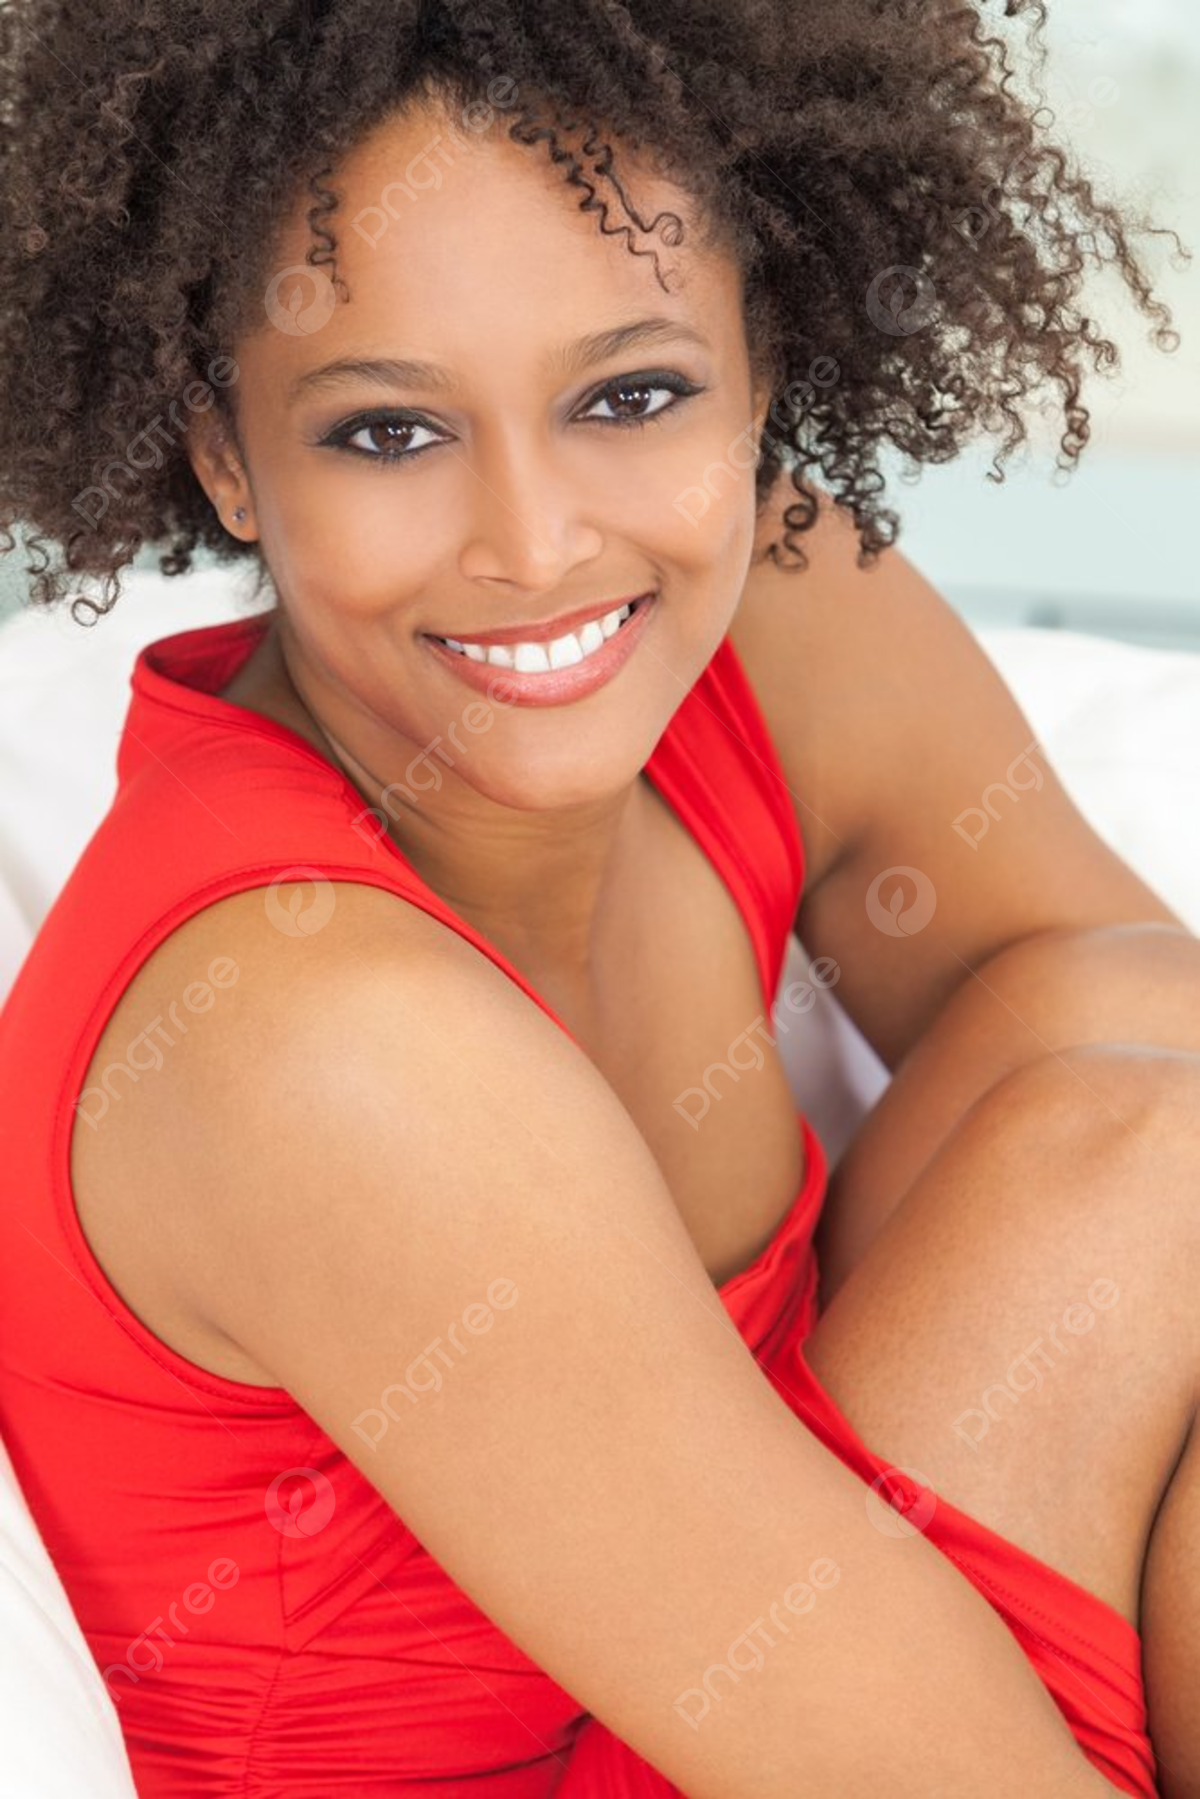 brid campbell share sexy mixed race women photos